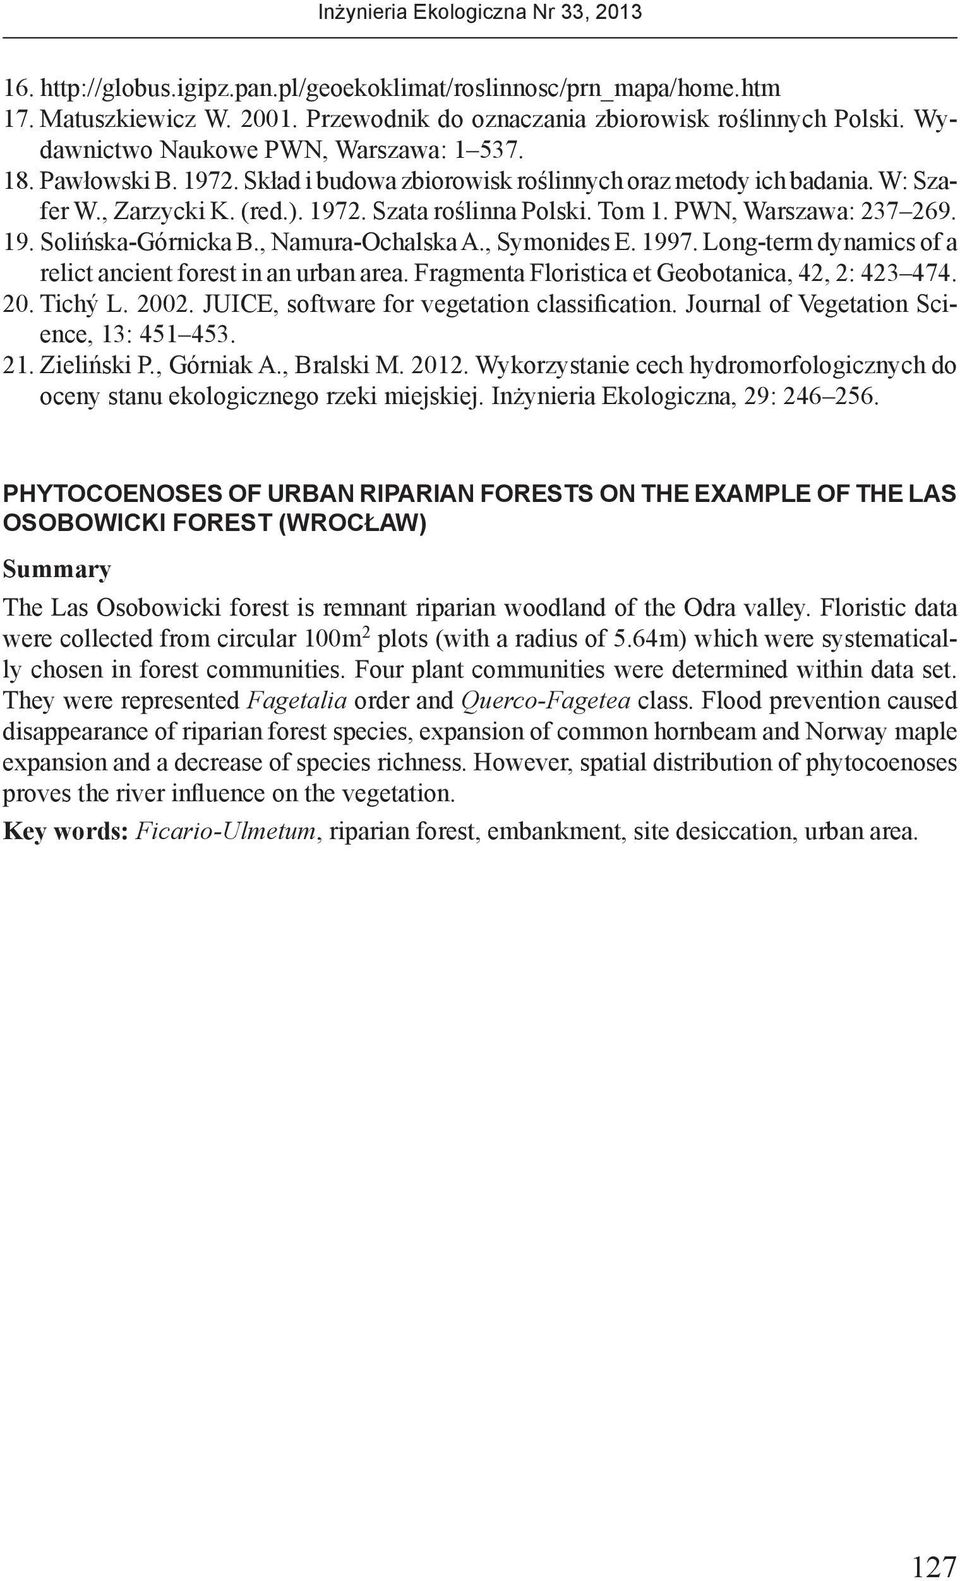 , Namura-Ochalska A., Symonides E. 1997. Long-term dynamics of a relict ancient forest in an urban area. Fragmenta Floristica et Geobotanica, 42, 2: 423 474. 20. Tichý L. 2002.